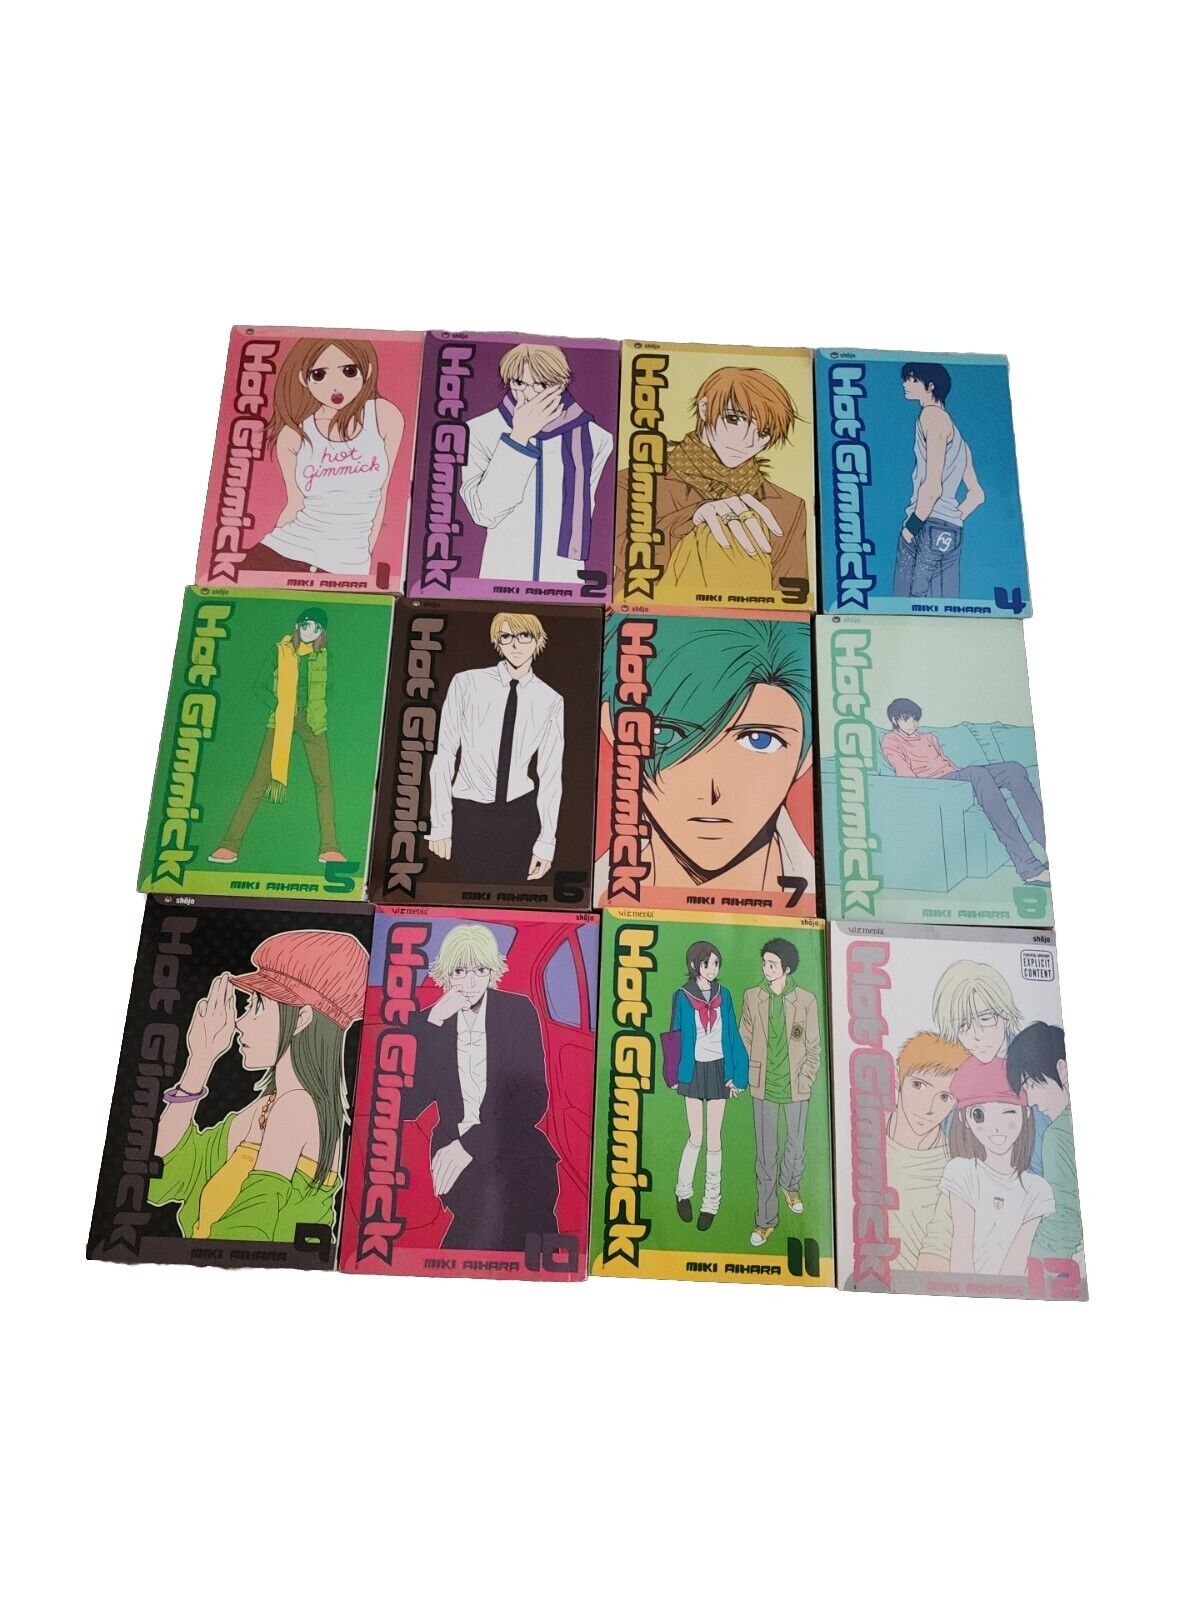 Hot Gimmick manga | Complete Series - Vol 1-12